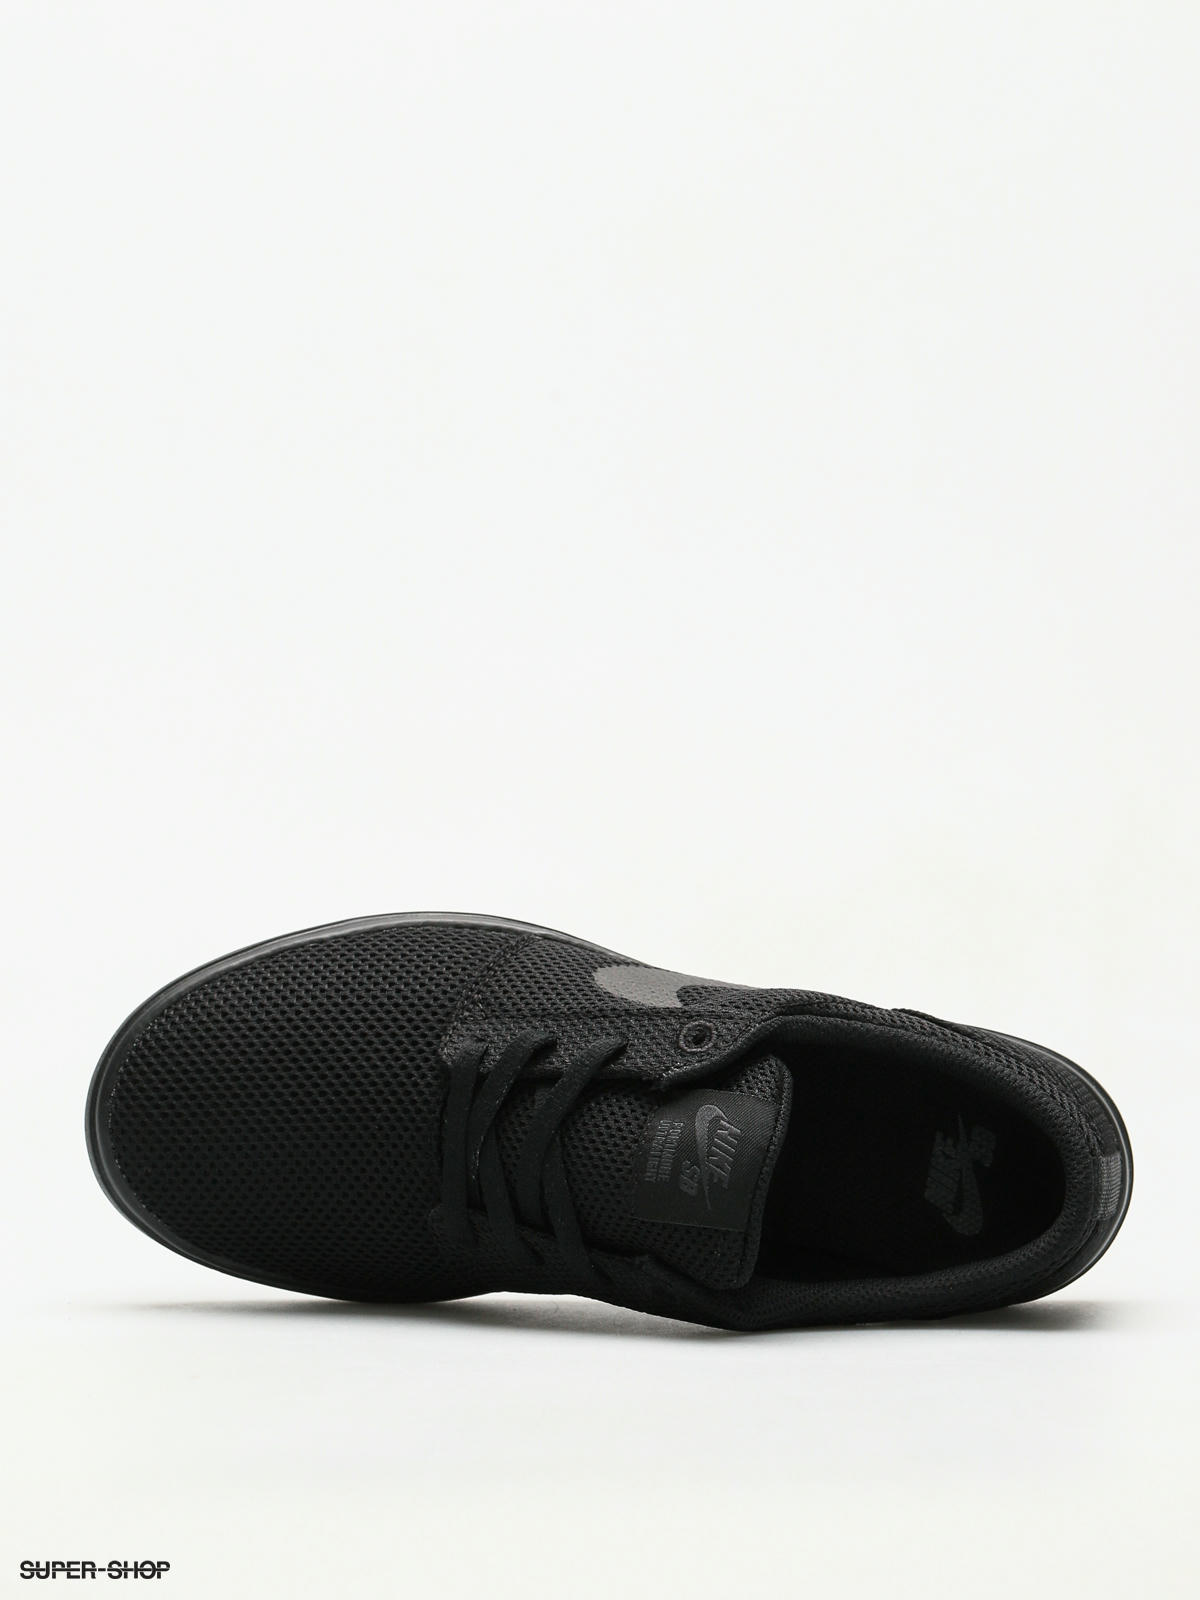 nike sb portmore ii ultralight grey & black shoes